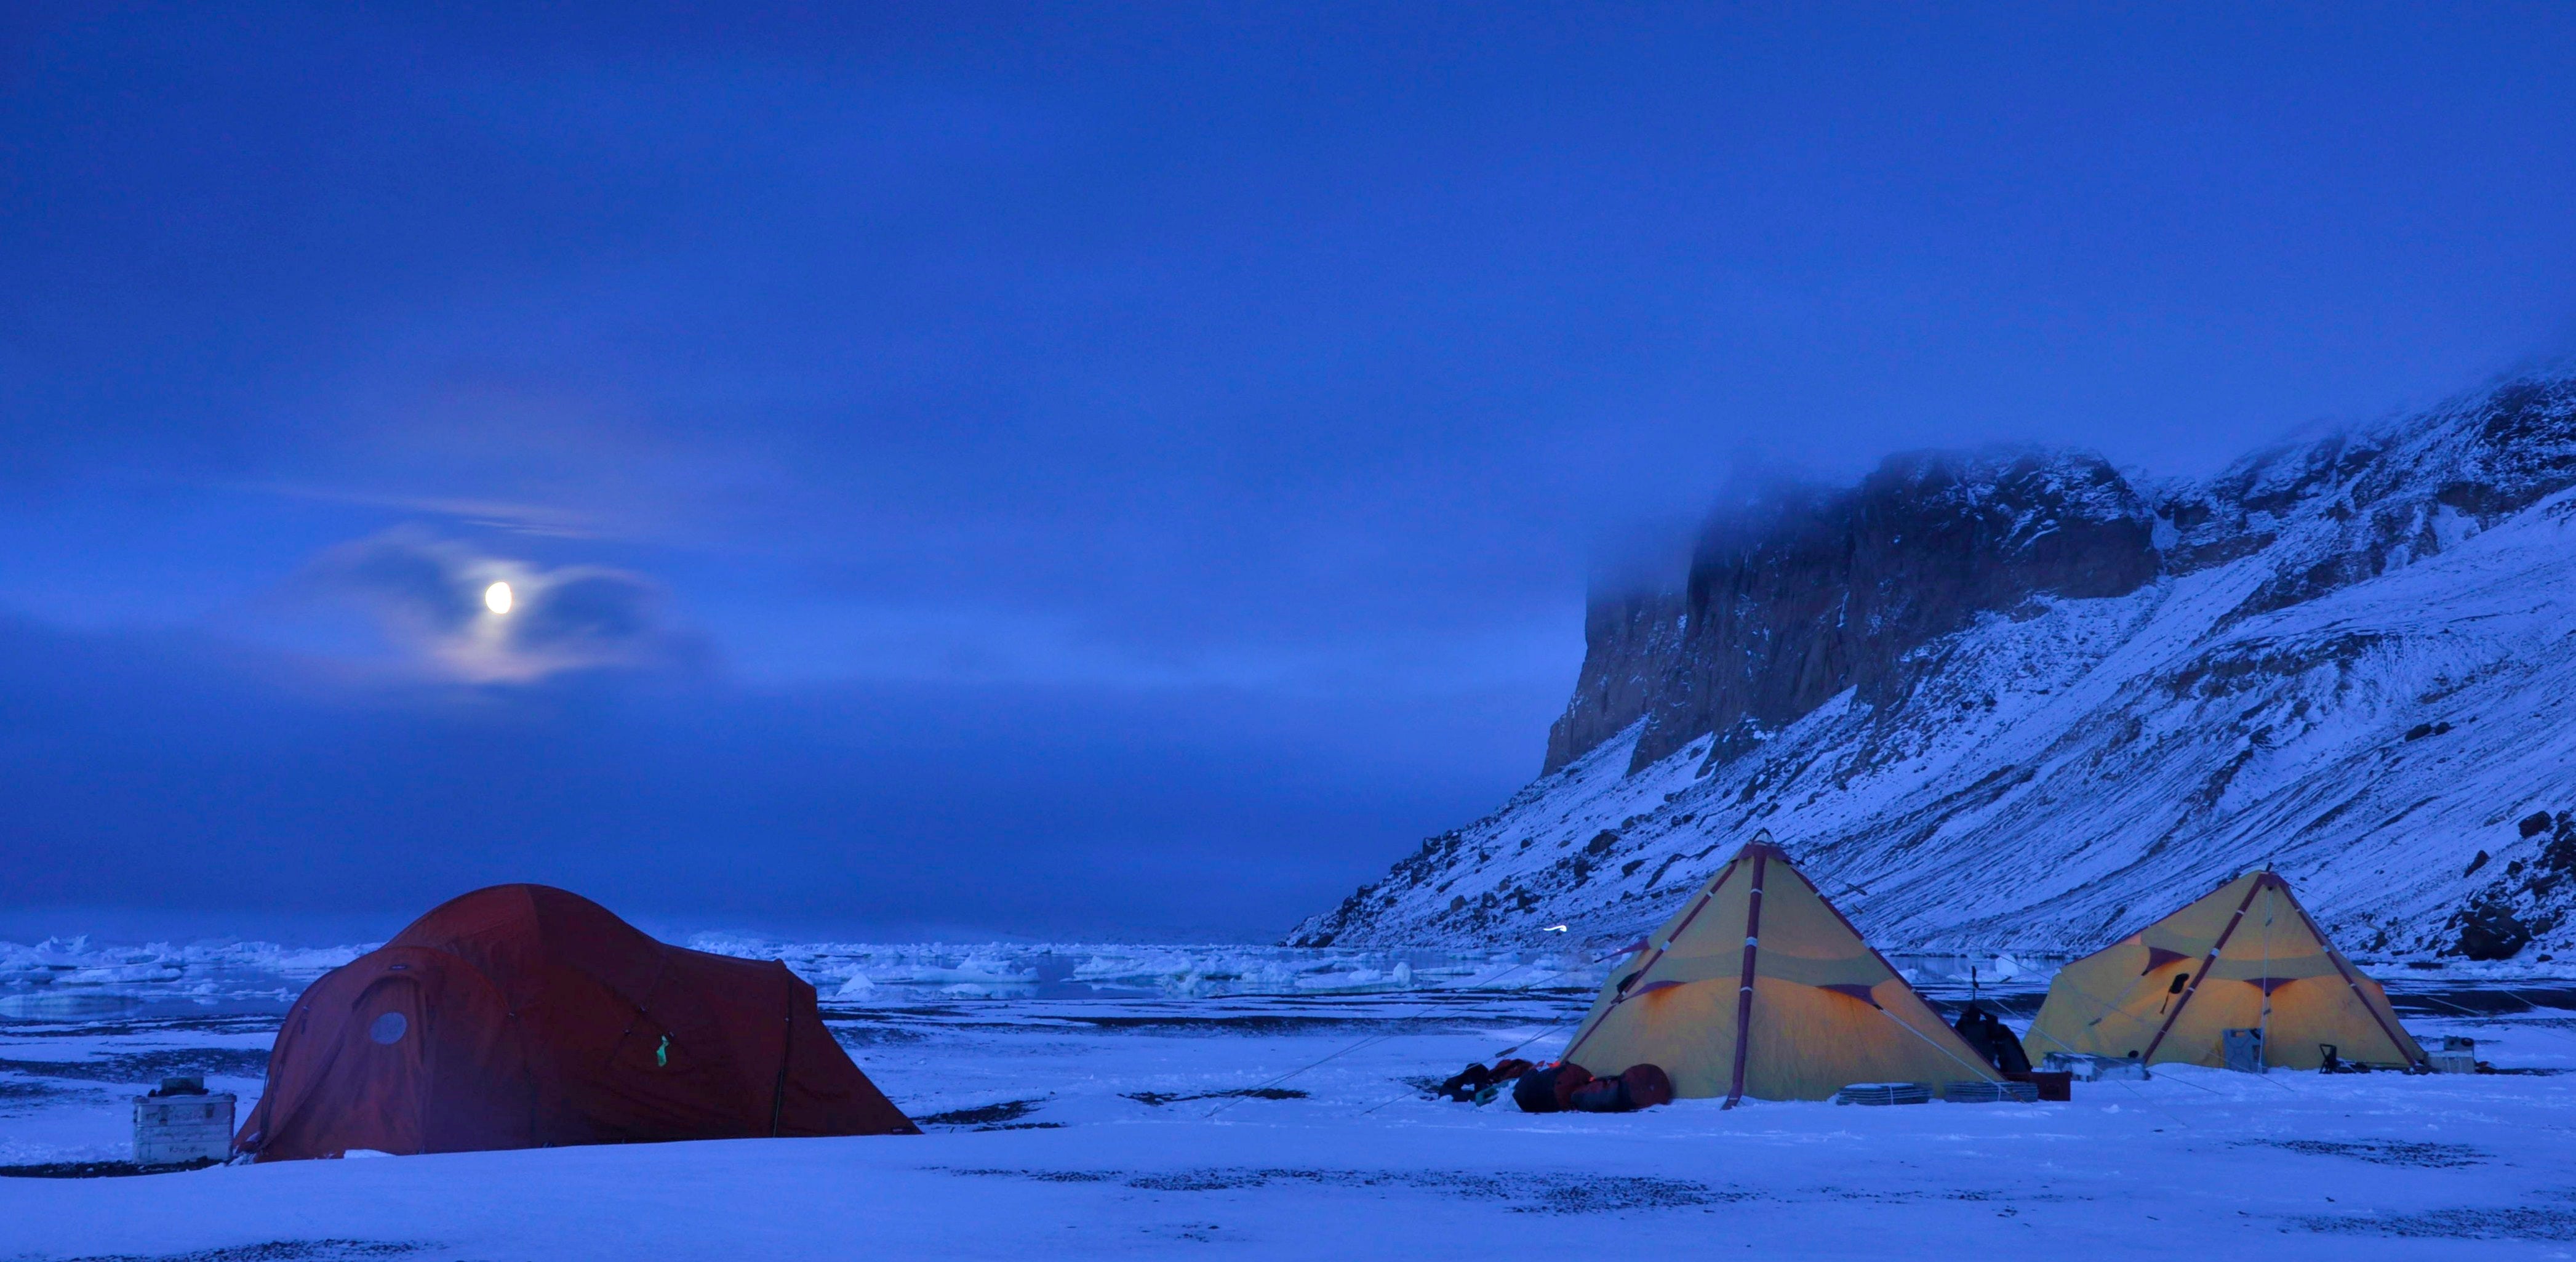 4 season mountaineering tent in winter